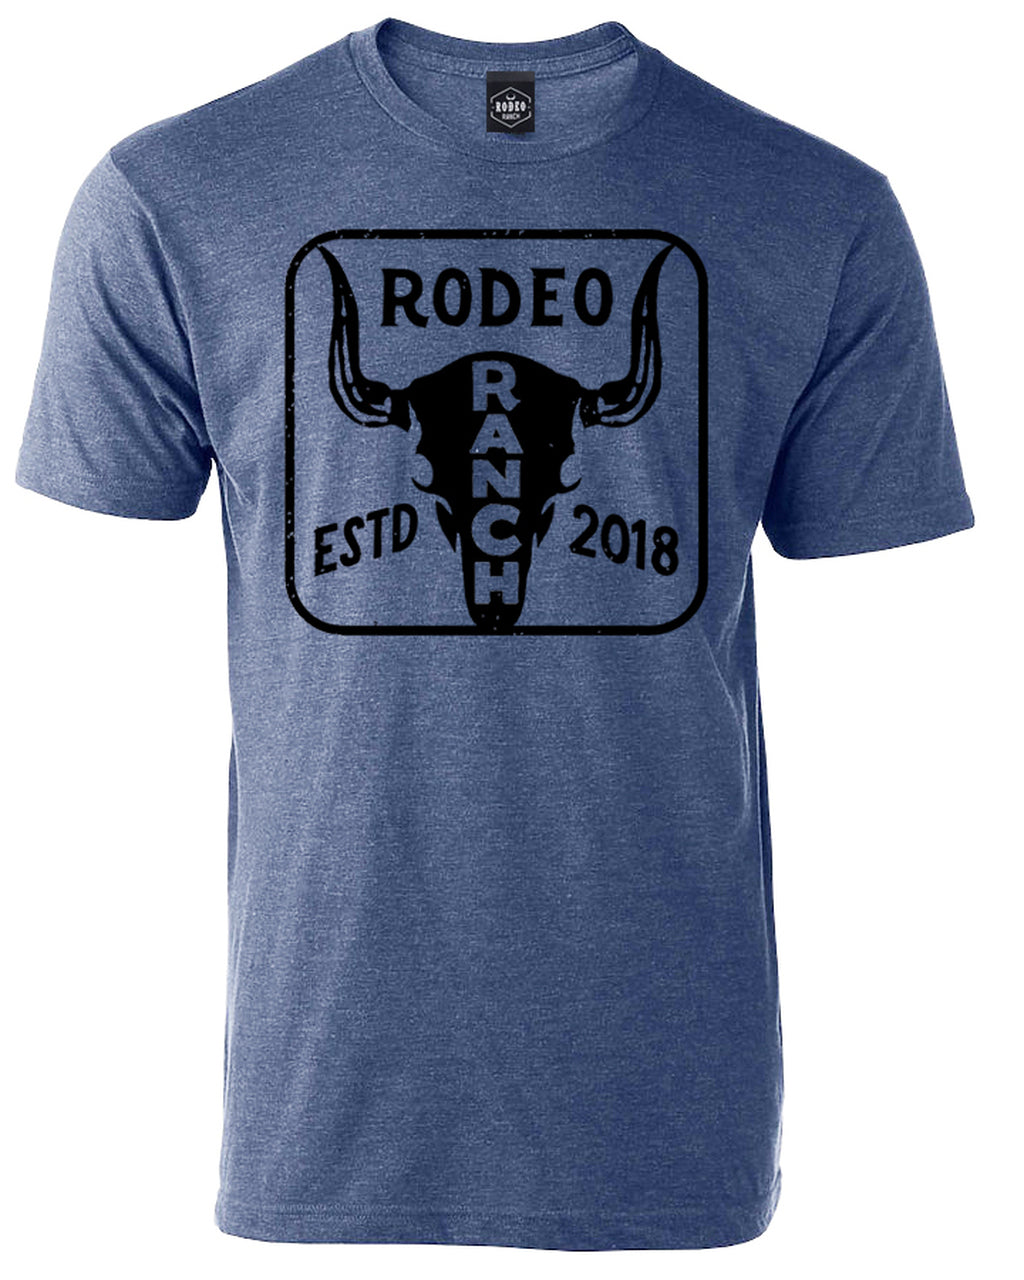 Rodeo Ranch Est Short Sleeve Shirt - Heather Denim